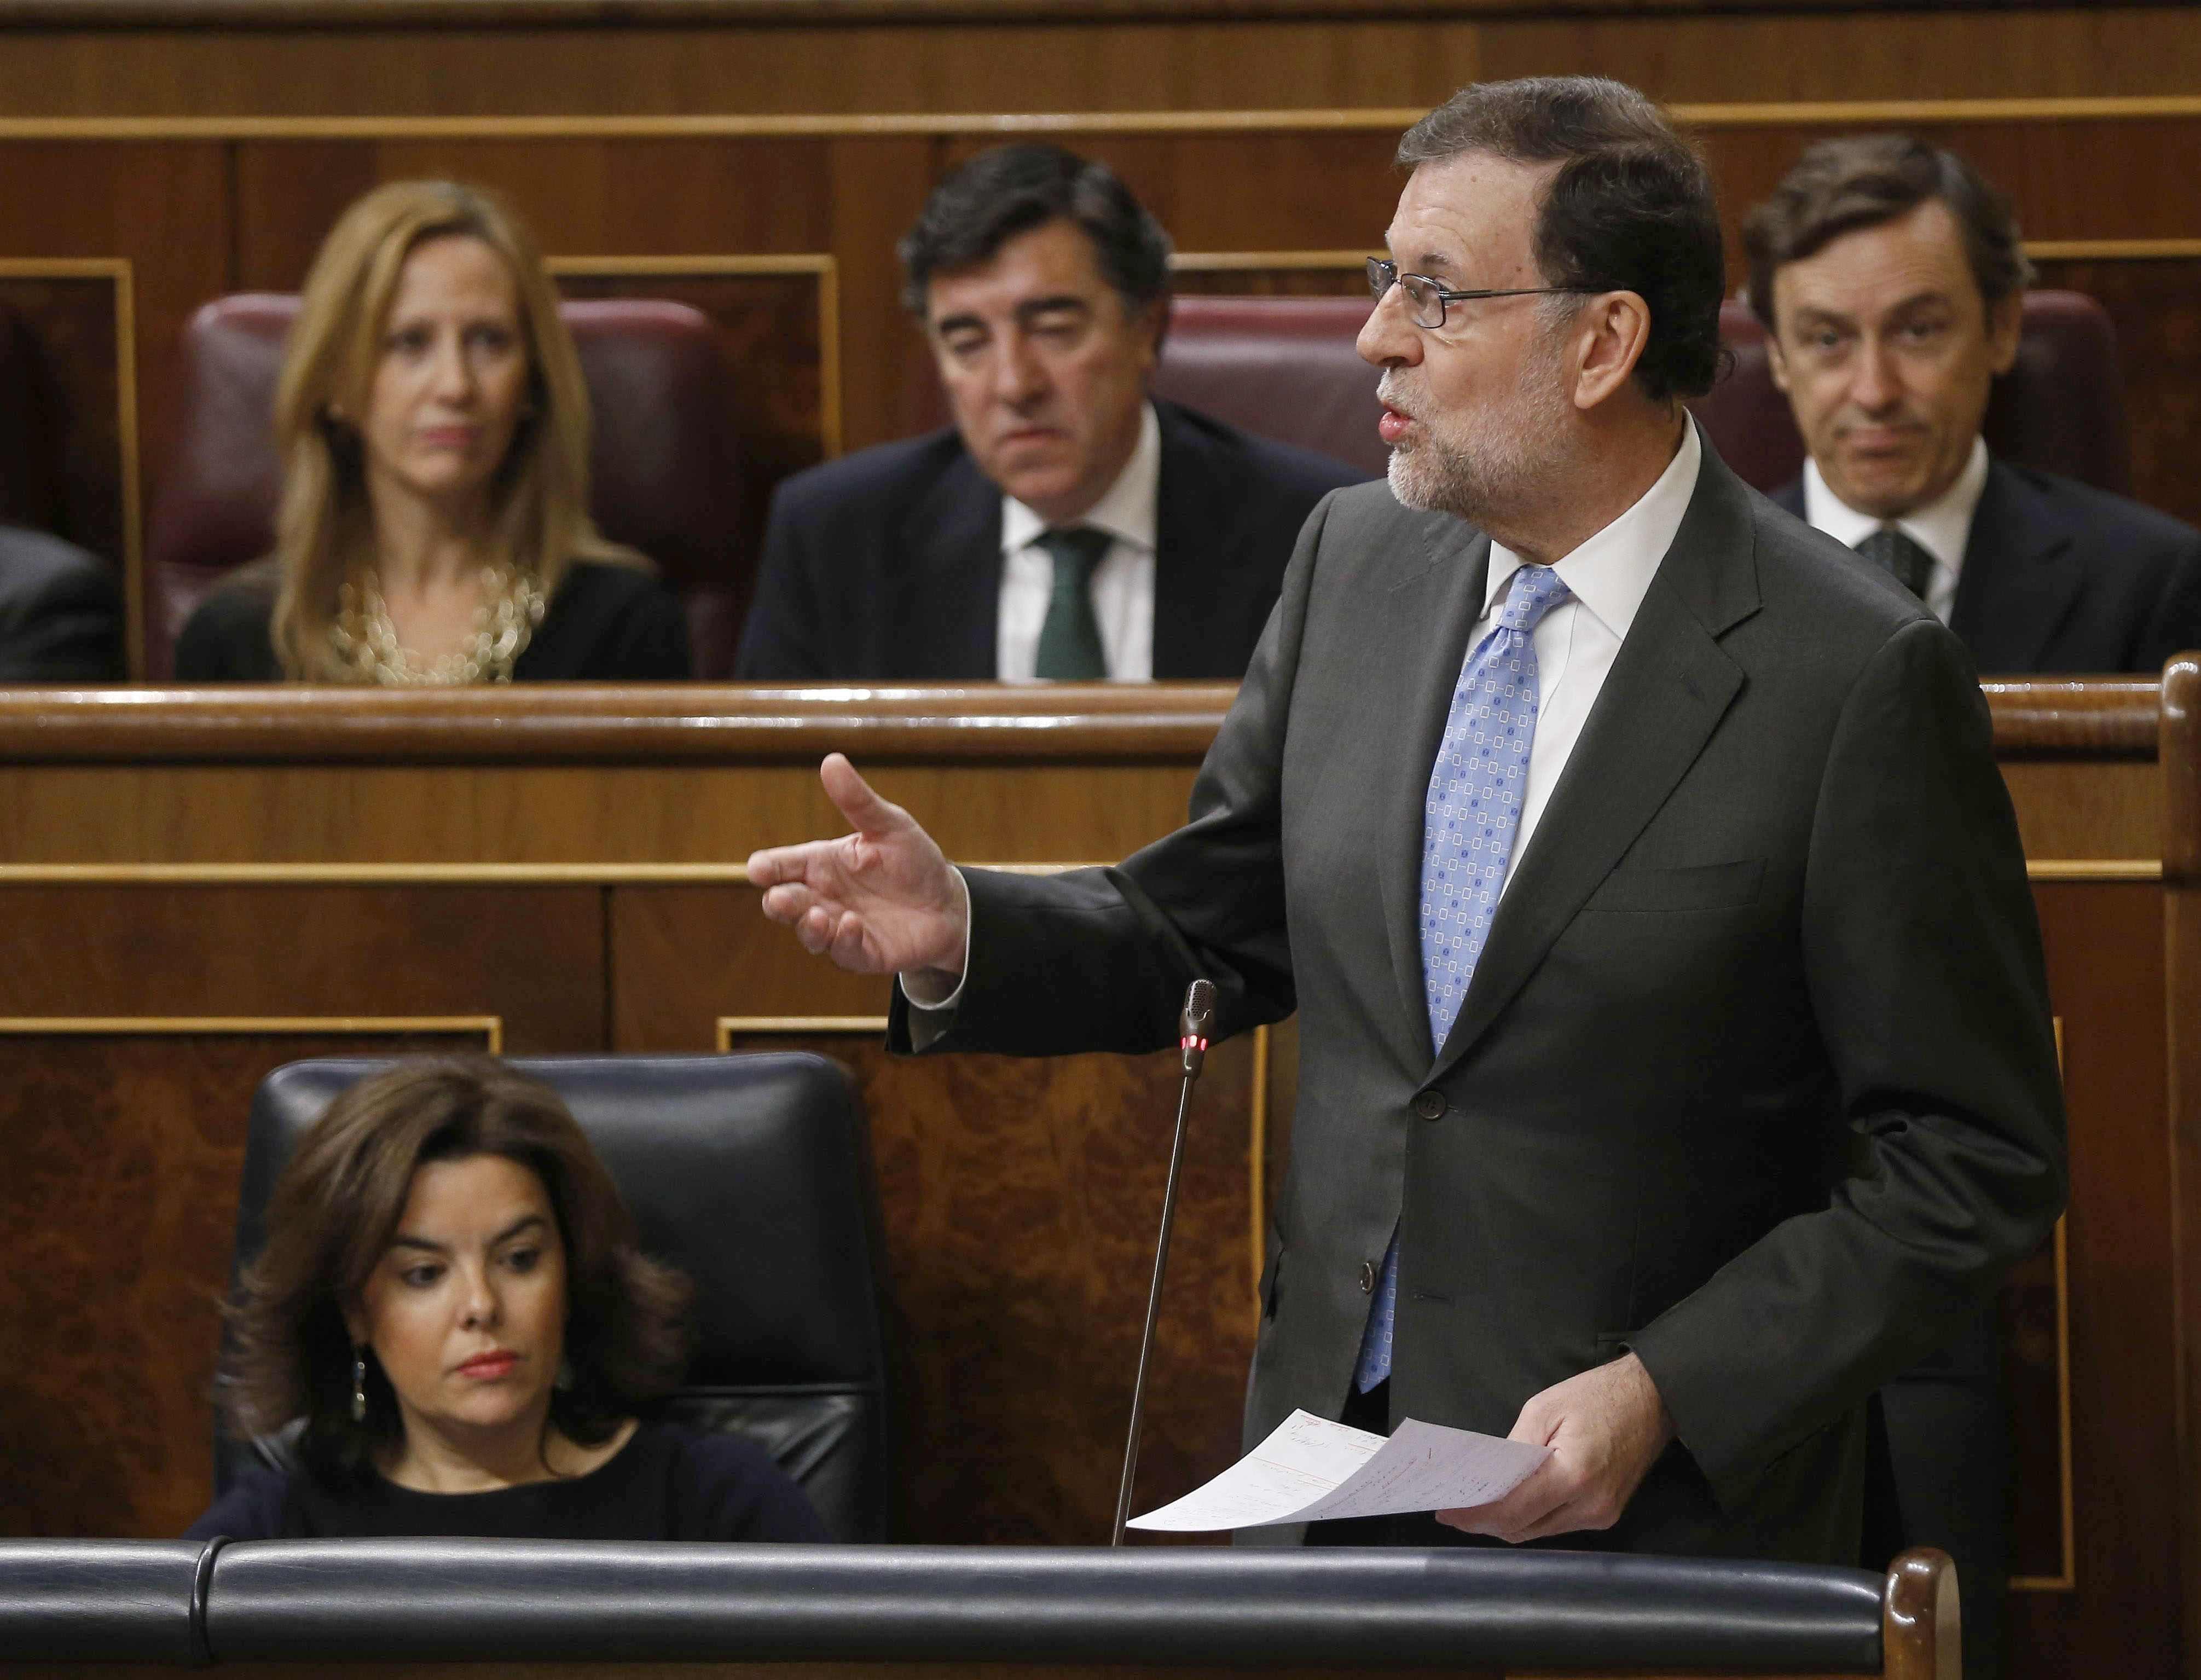 Rajoy: "Parece broma decir que en España no hay libertad de expresión"